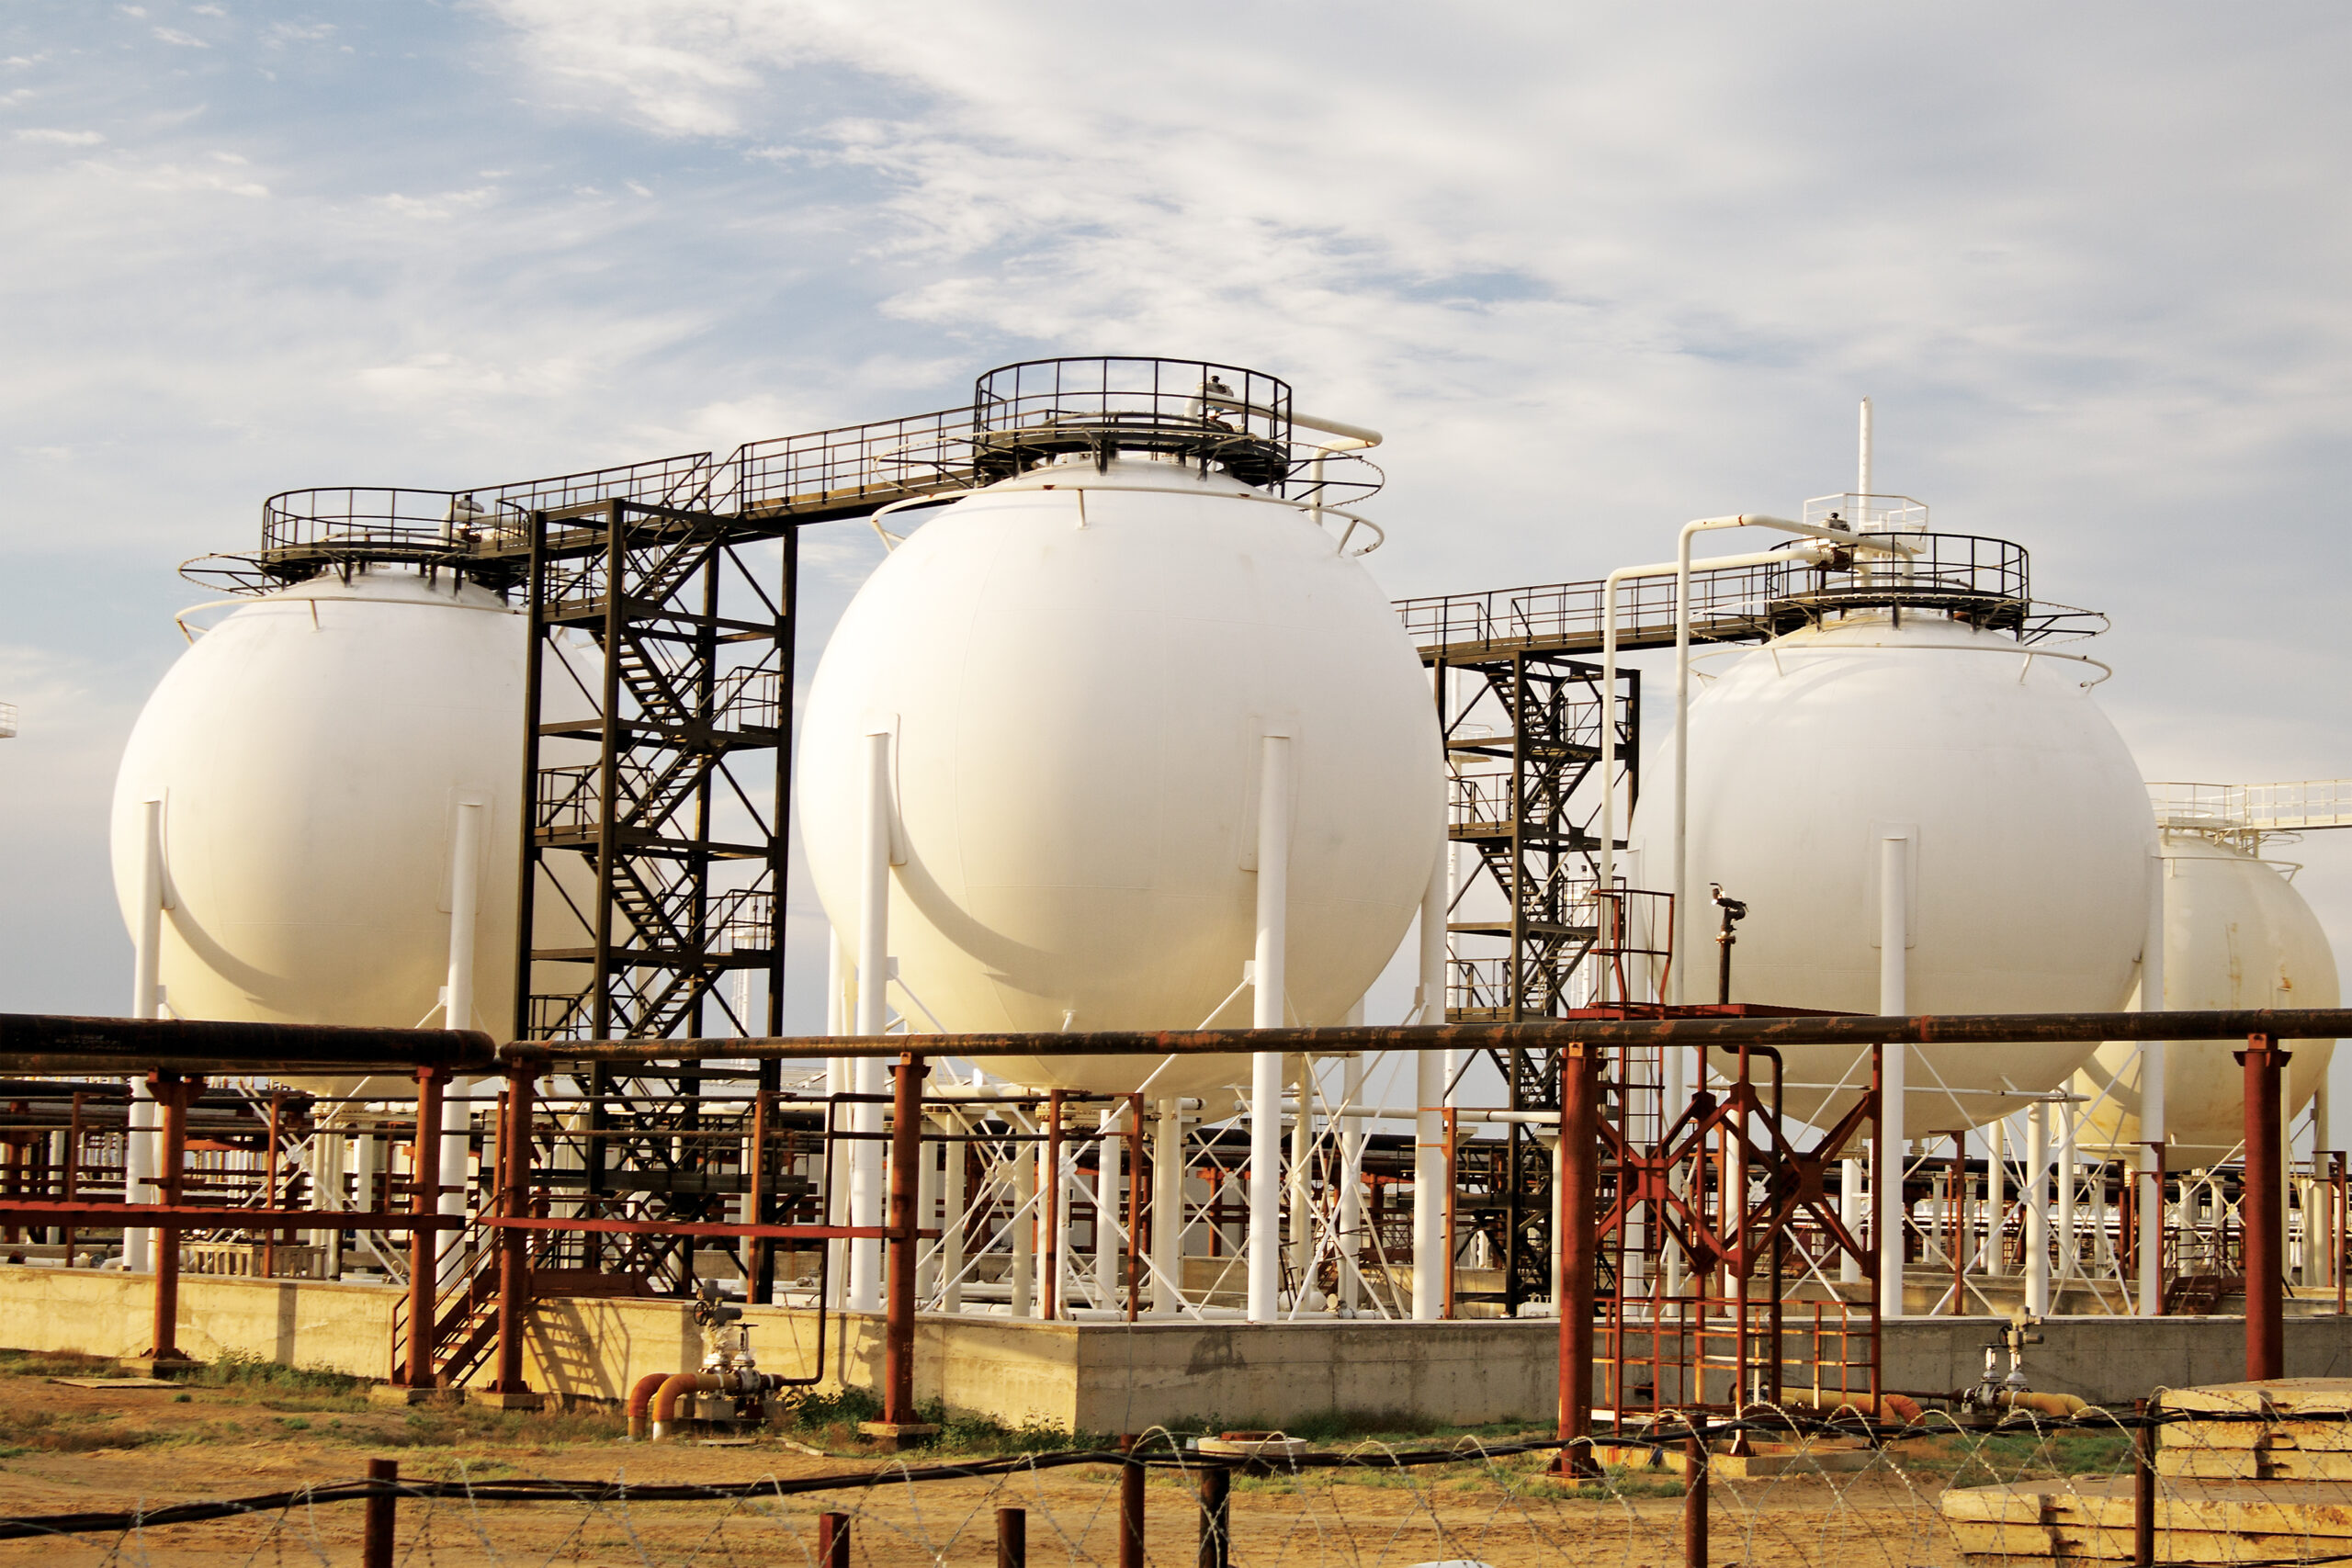 LNG gas facilities